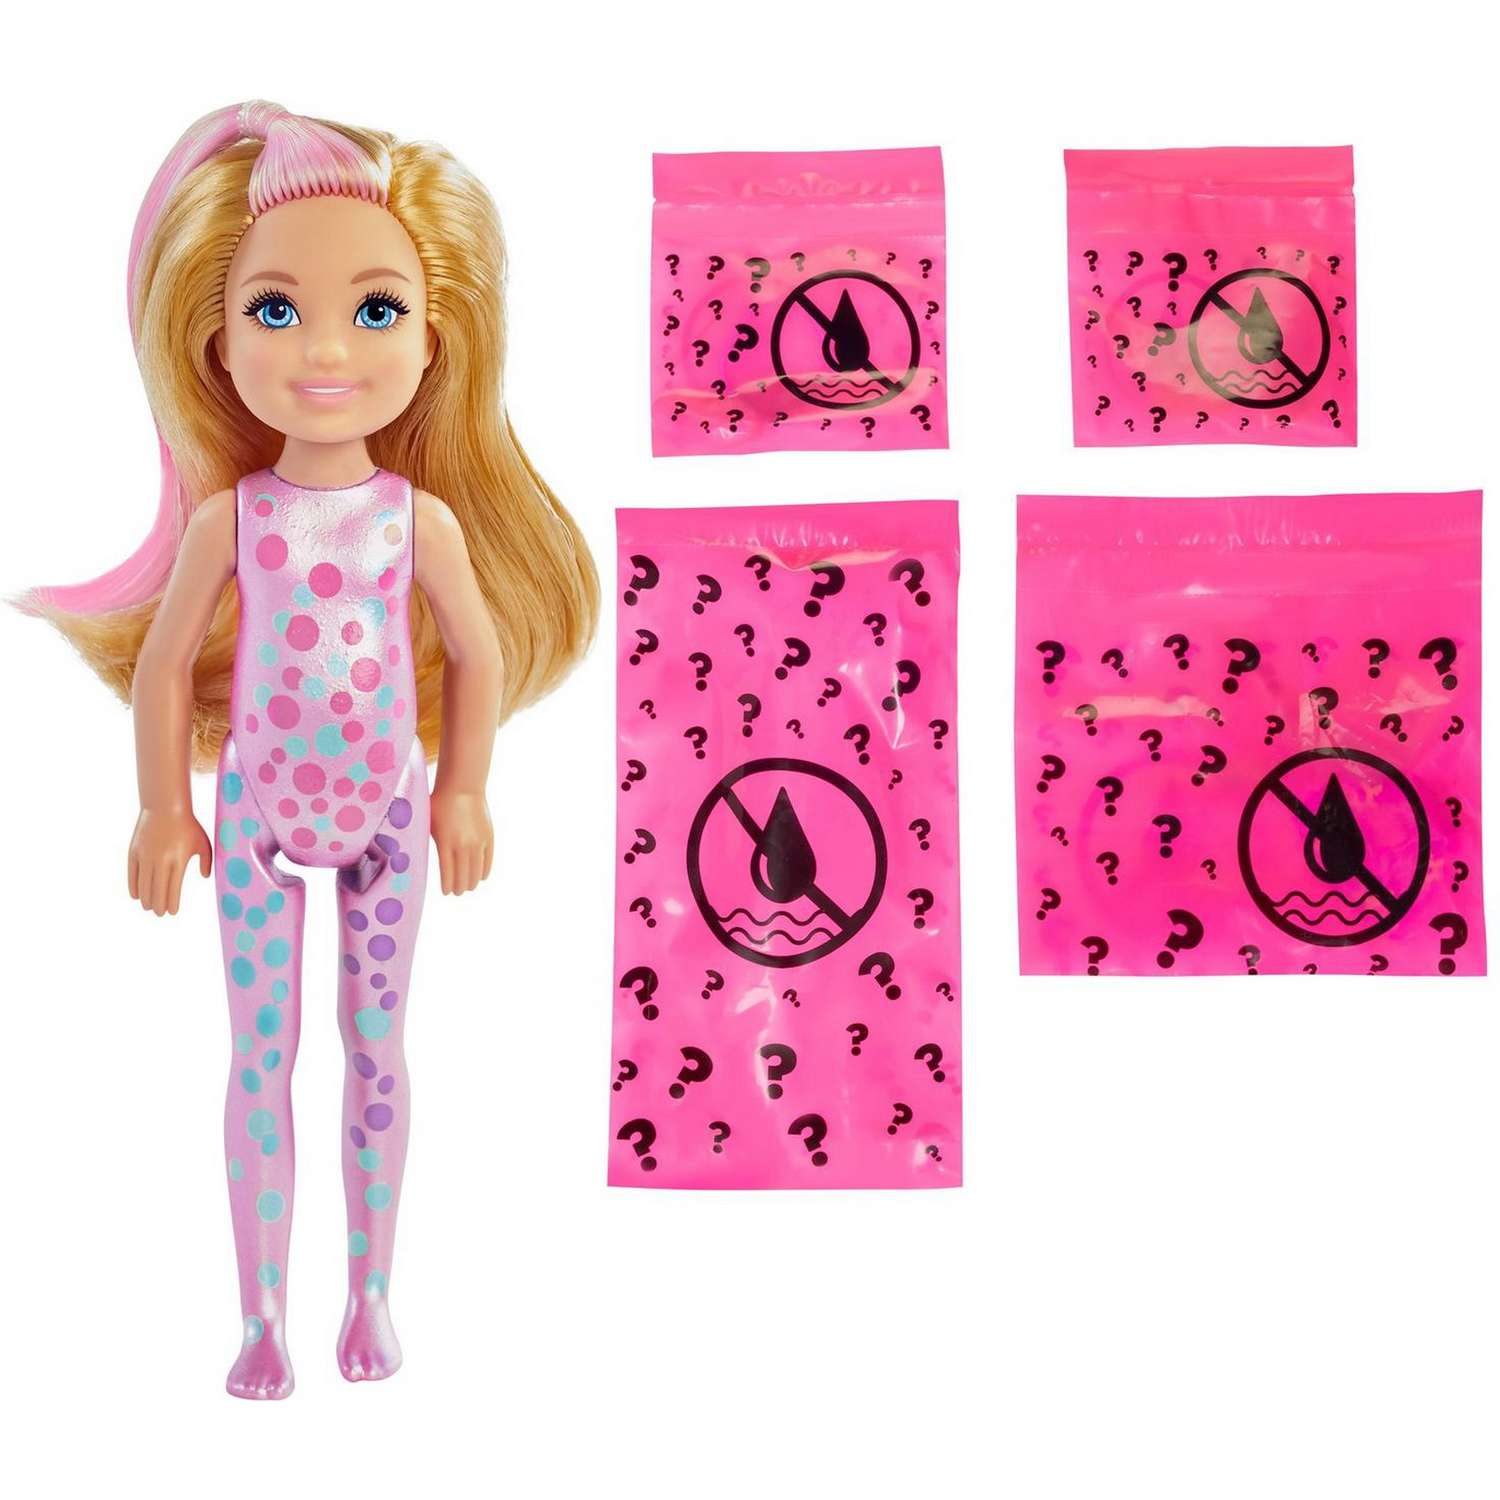 Кукла Barbie Челси в ярких нарядах для вечеринки в непрозрачной упаковке (Сюрприз) GTT26 GTT26 - фото 3